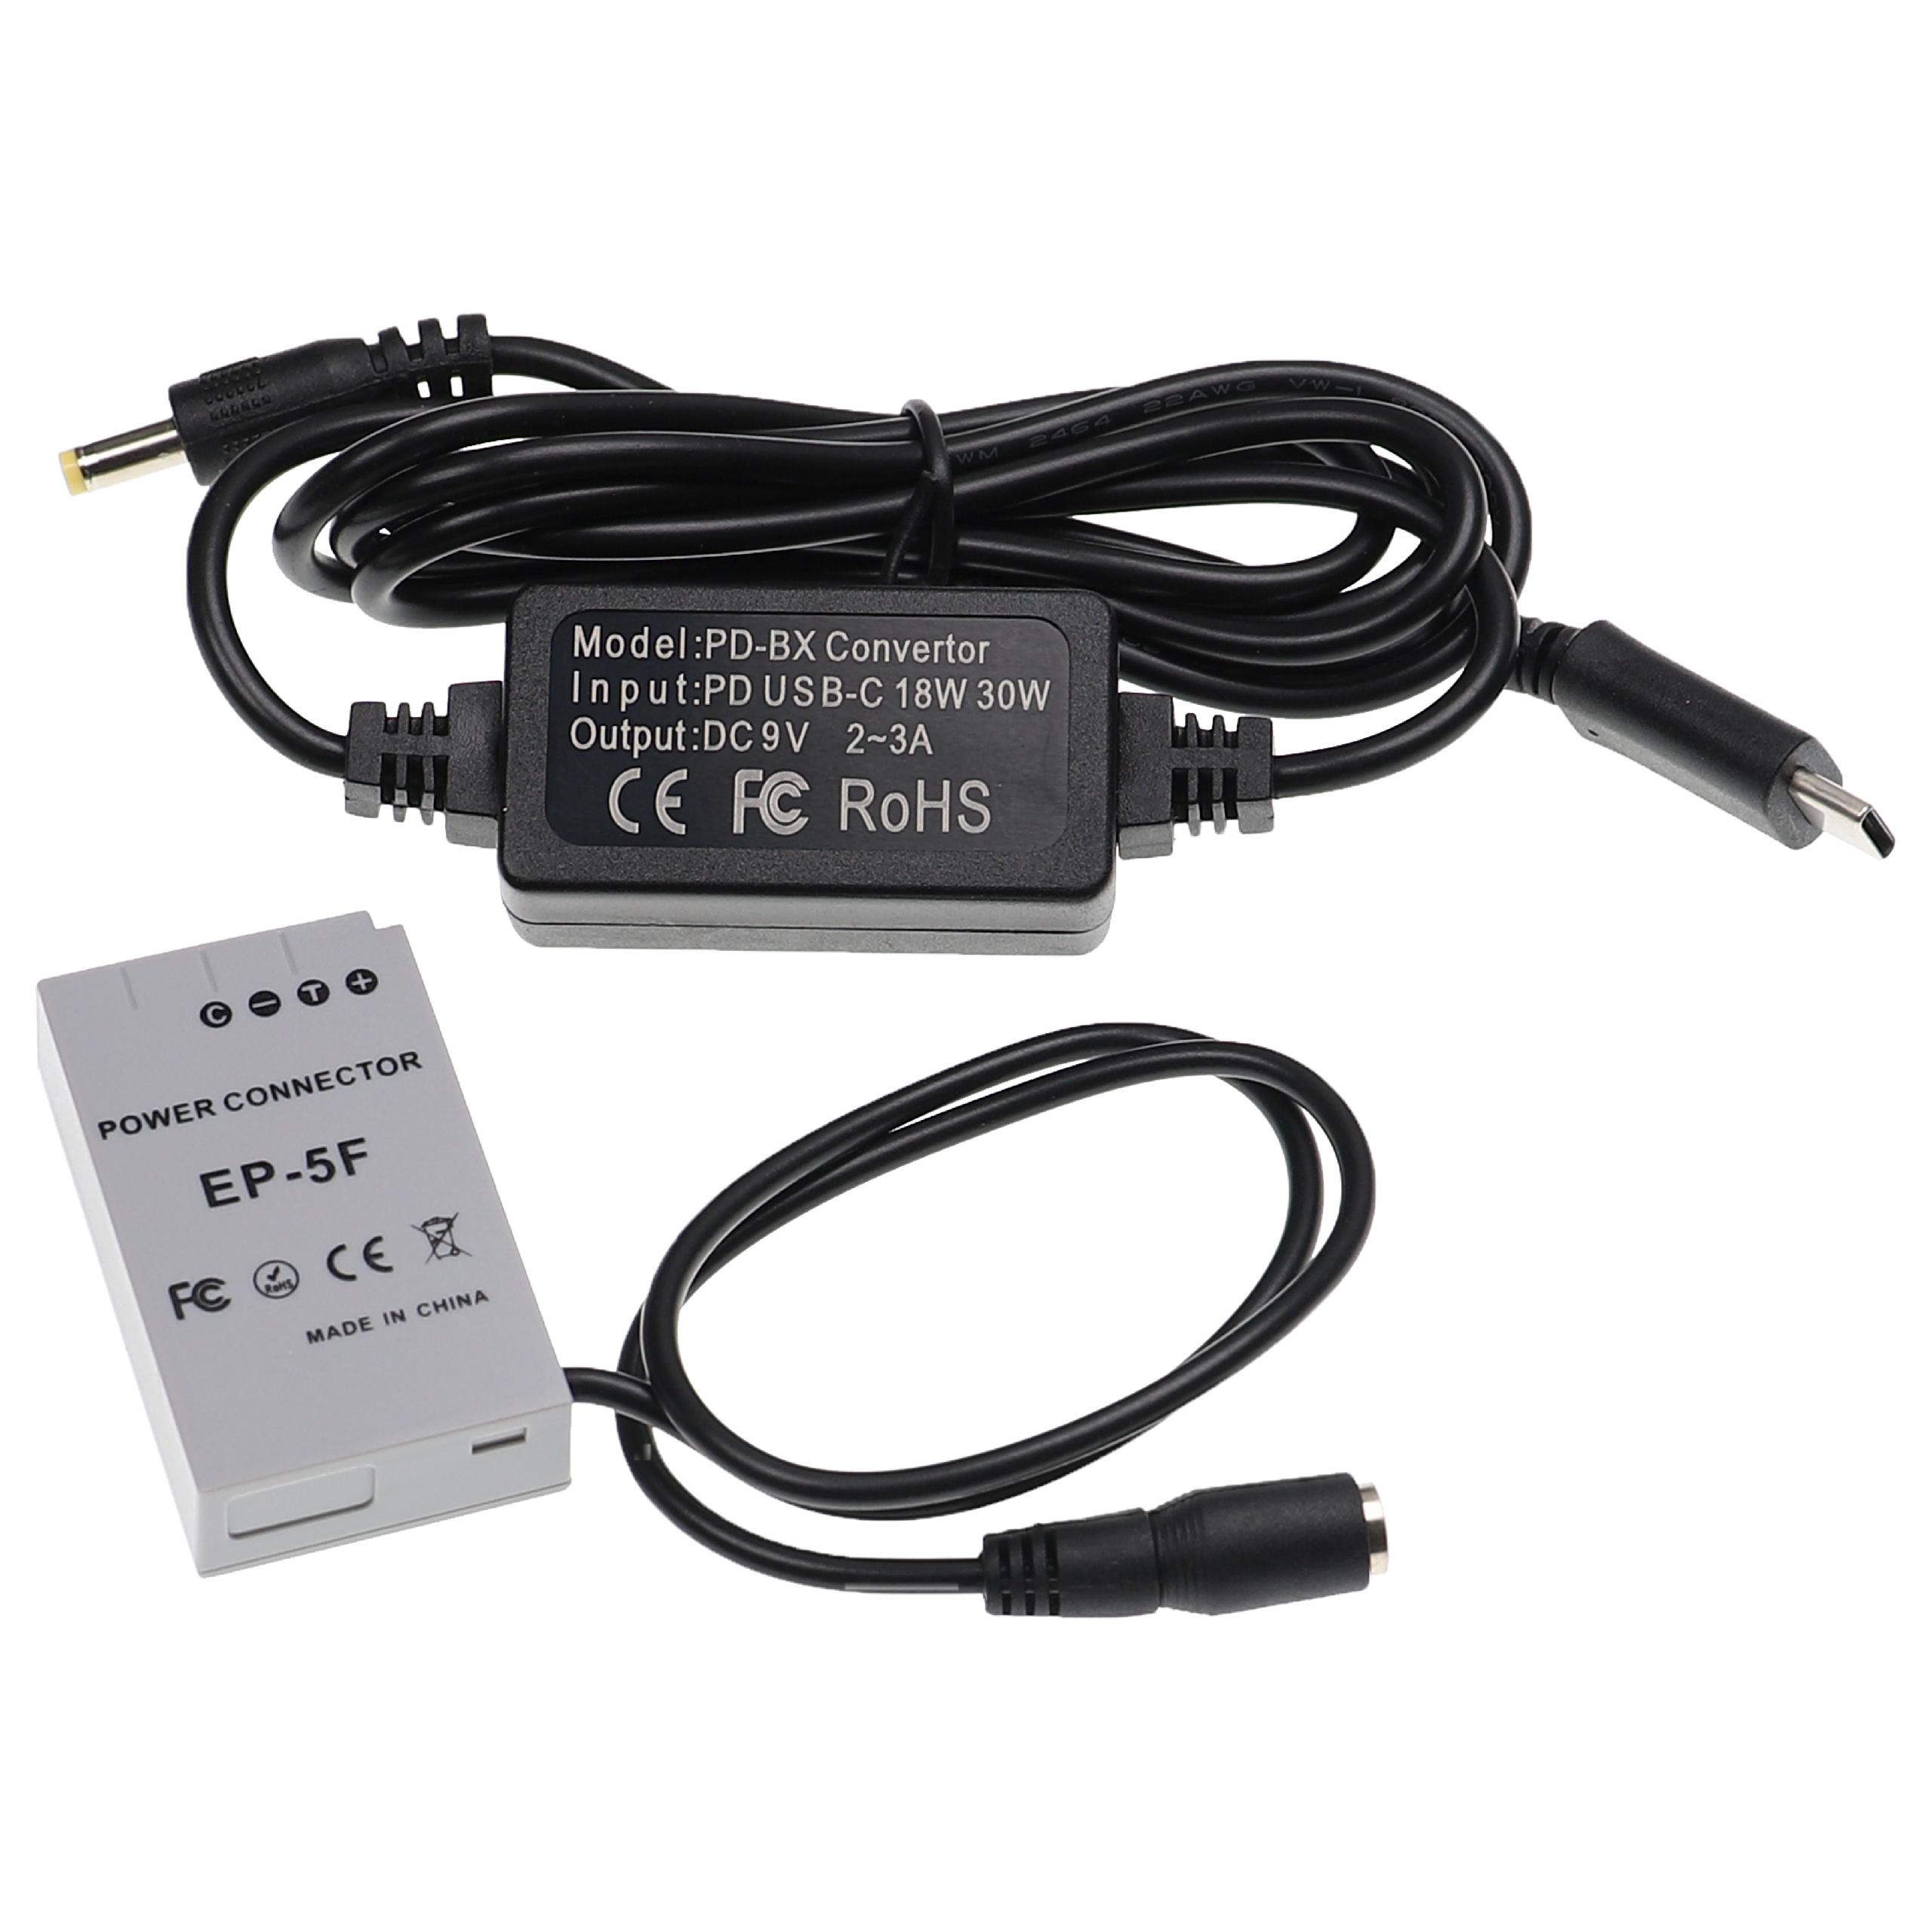 USB Power Supply replaces EH-5 for Camera + DC Coupler as Nikon EP-5F - 2 m, 9 V 3.0 A